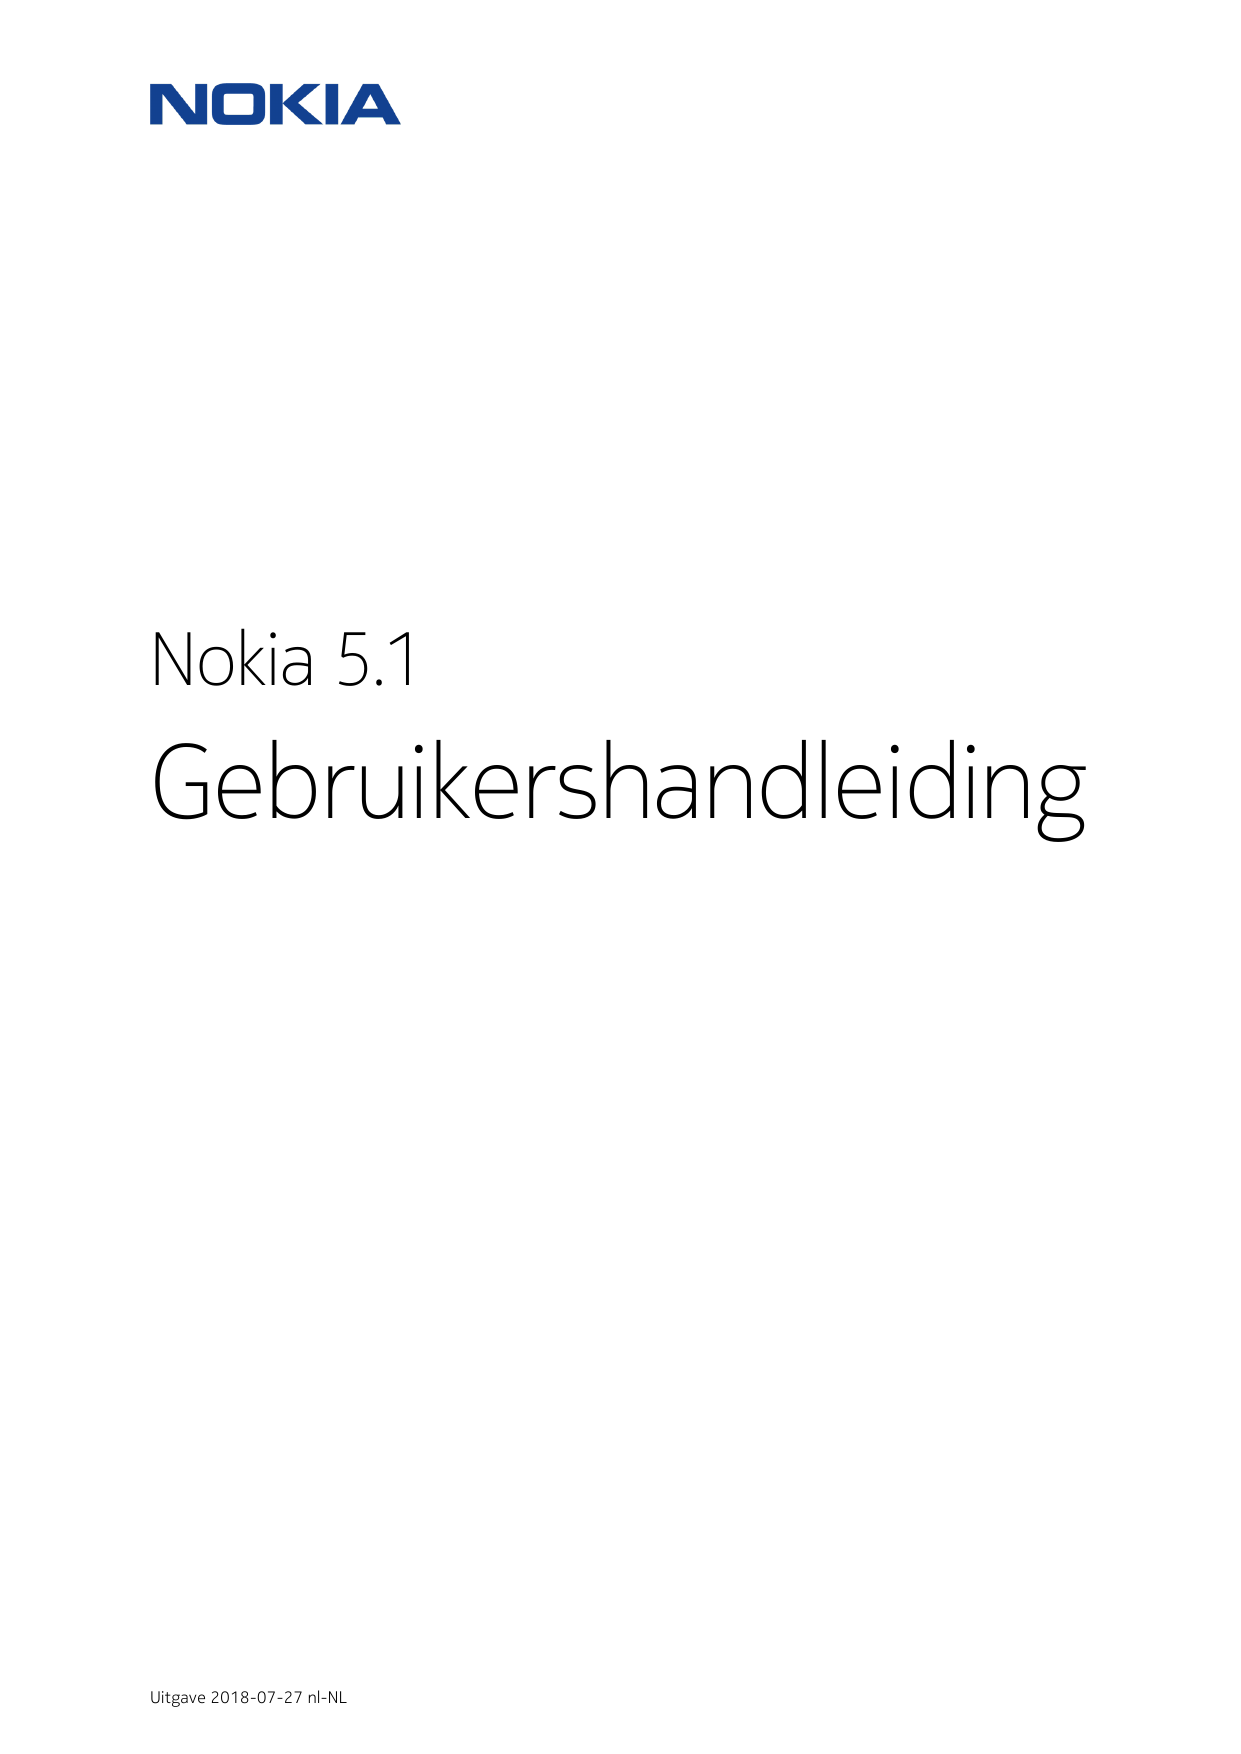 Nokia 5.1GebruikershandleidingUitgave 2018-07-27 nl-NL